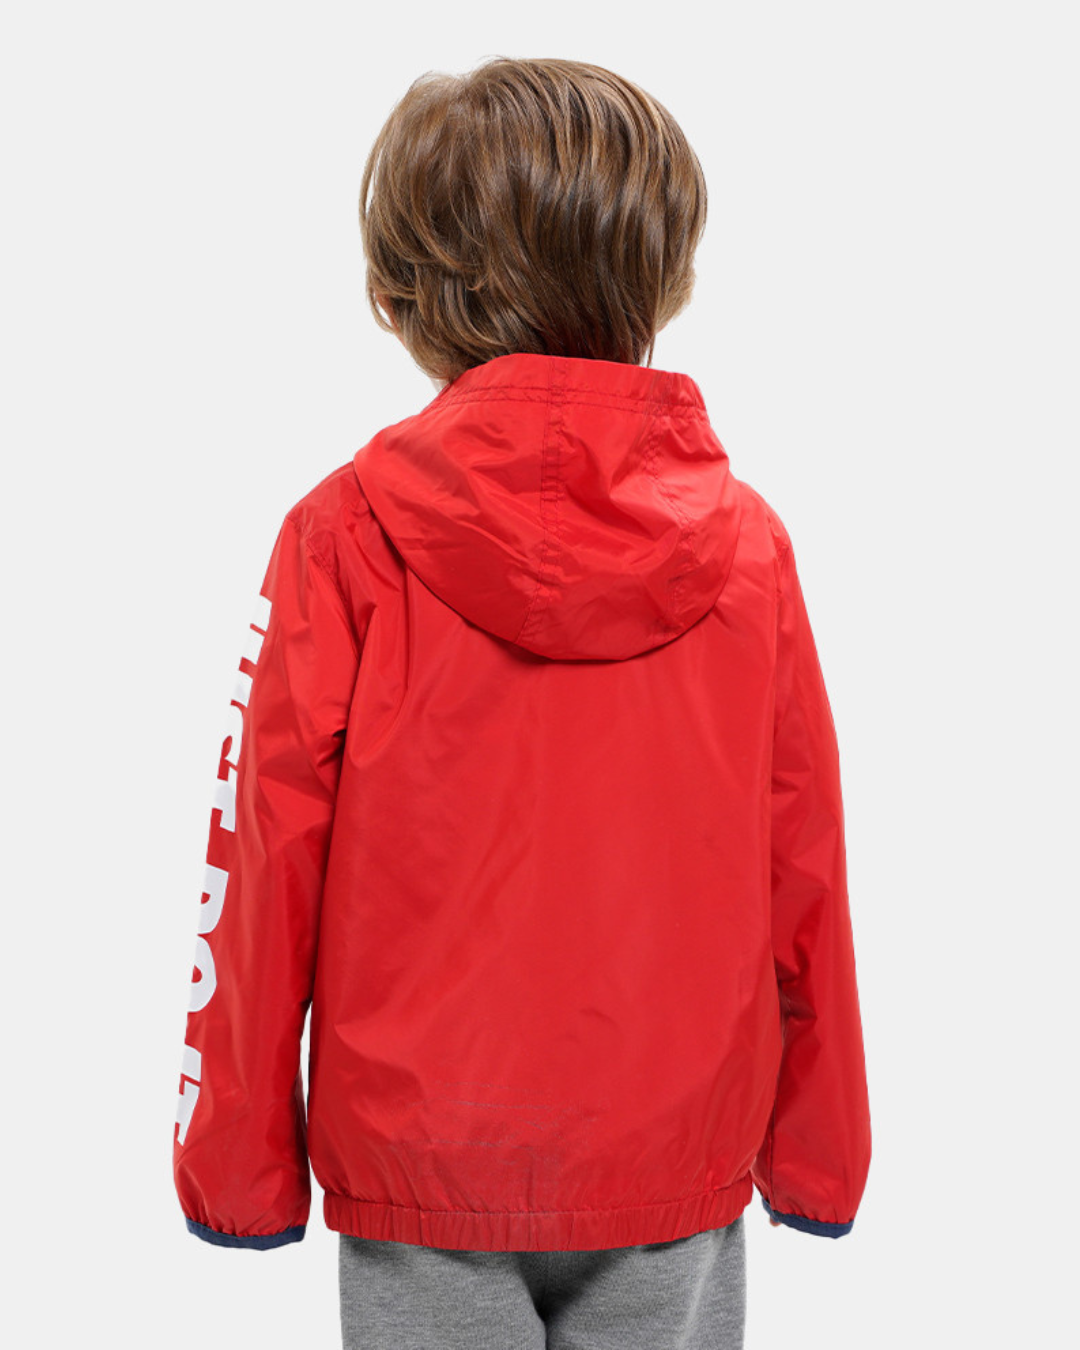 Nike Junior Jacket - Red